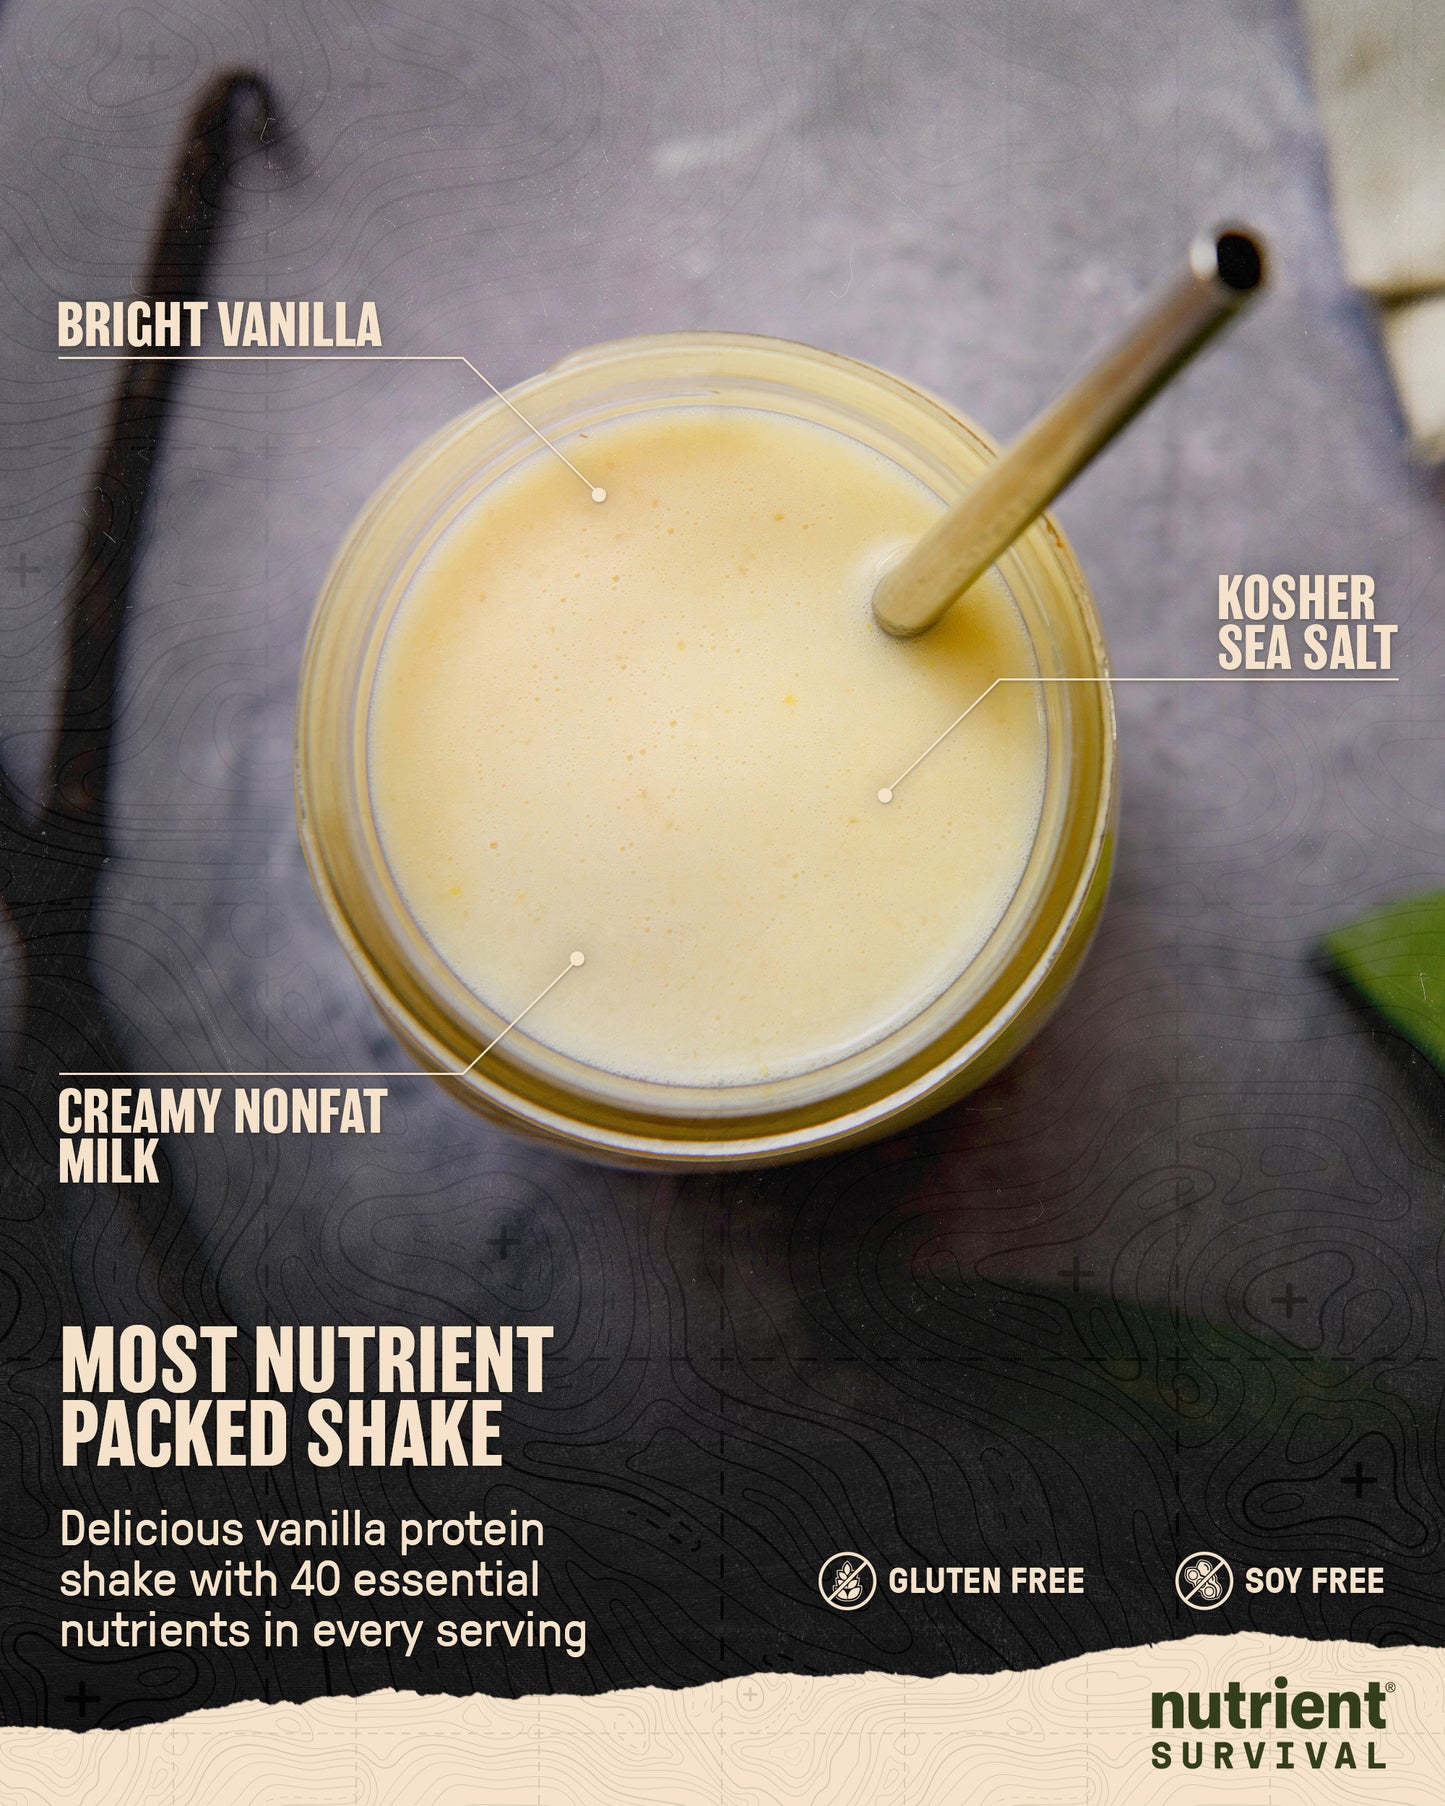 Creamy Vanilla Shake 6 Cans